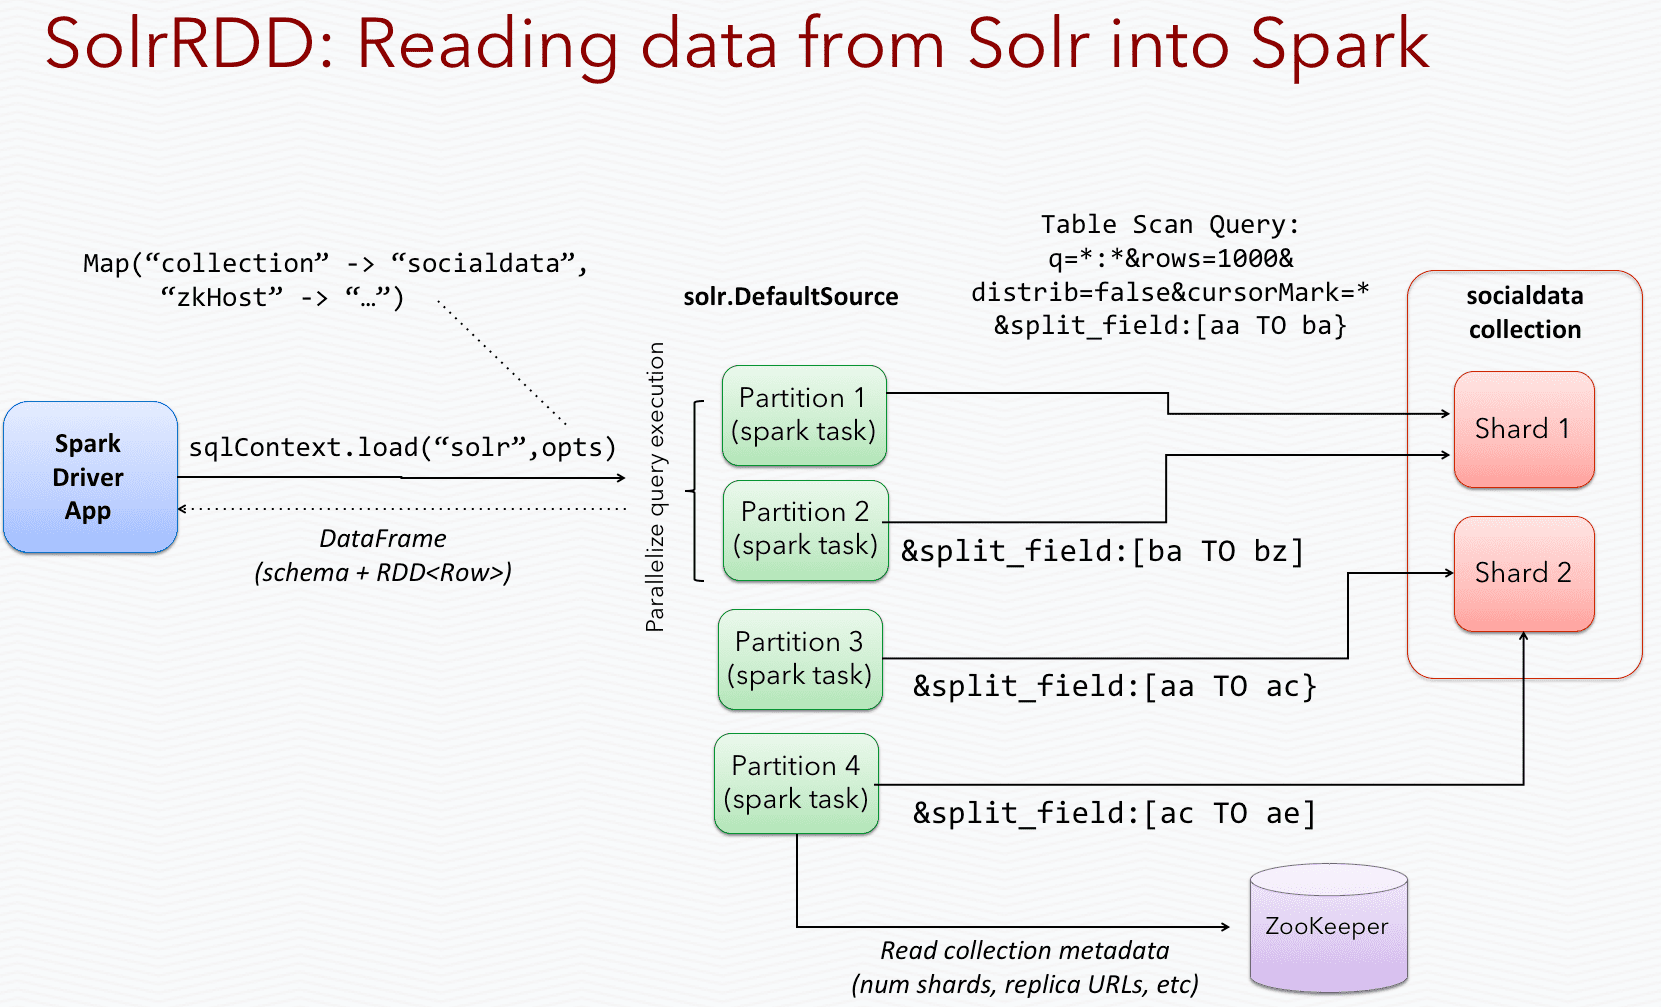 SolrRDD diagram